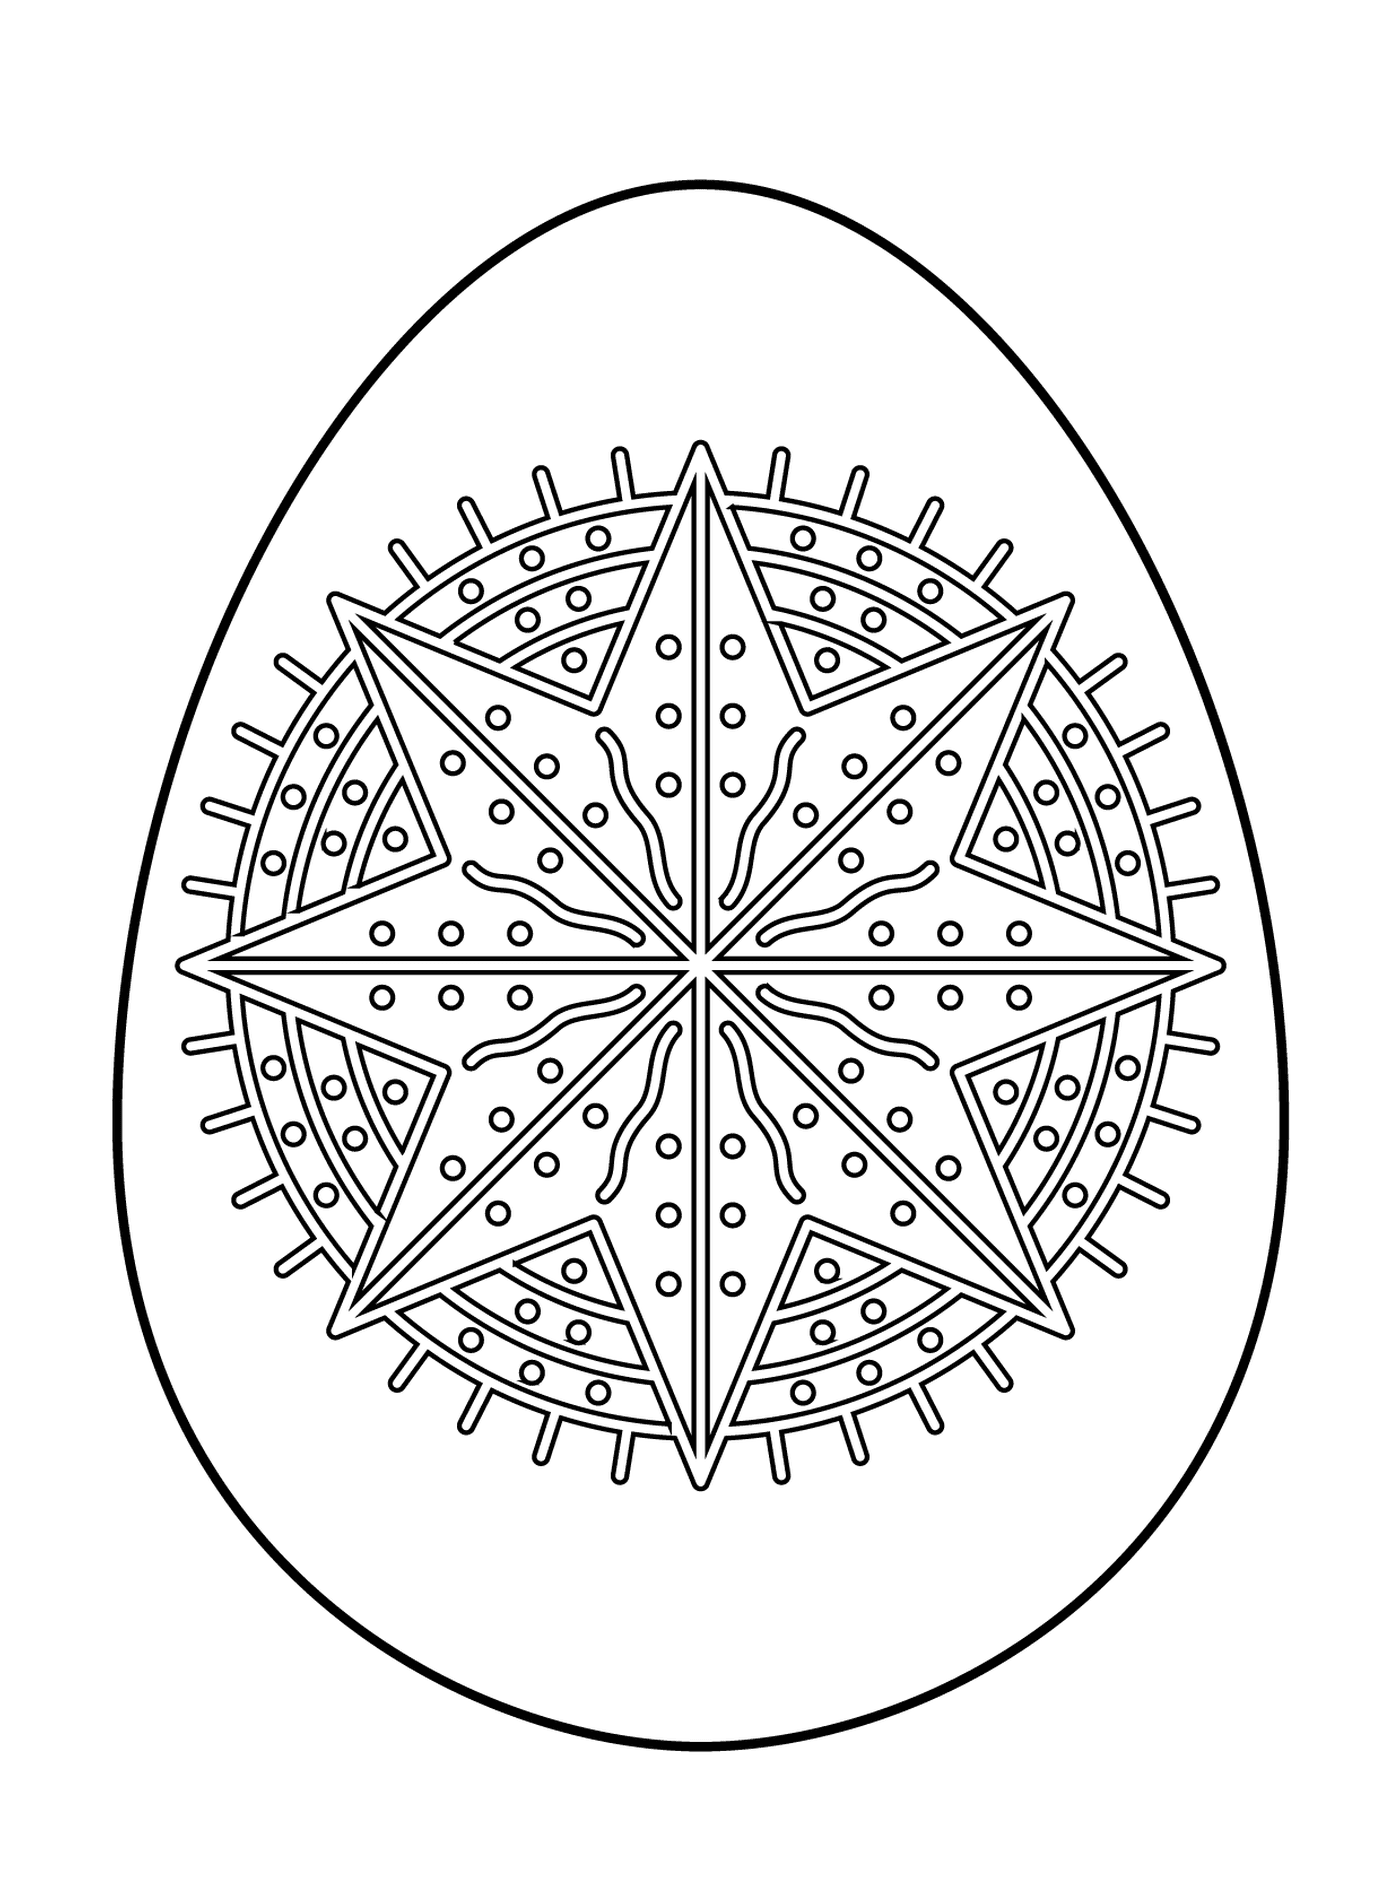 oeuf de paques avec octagram star